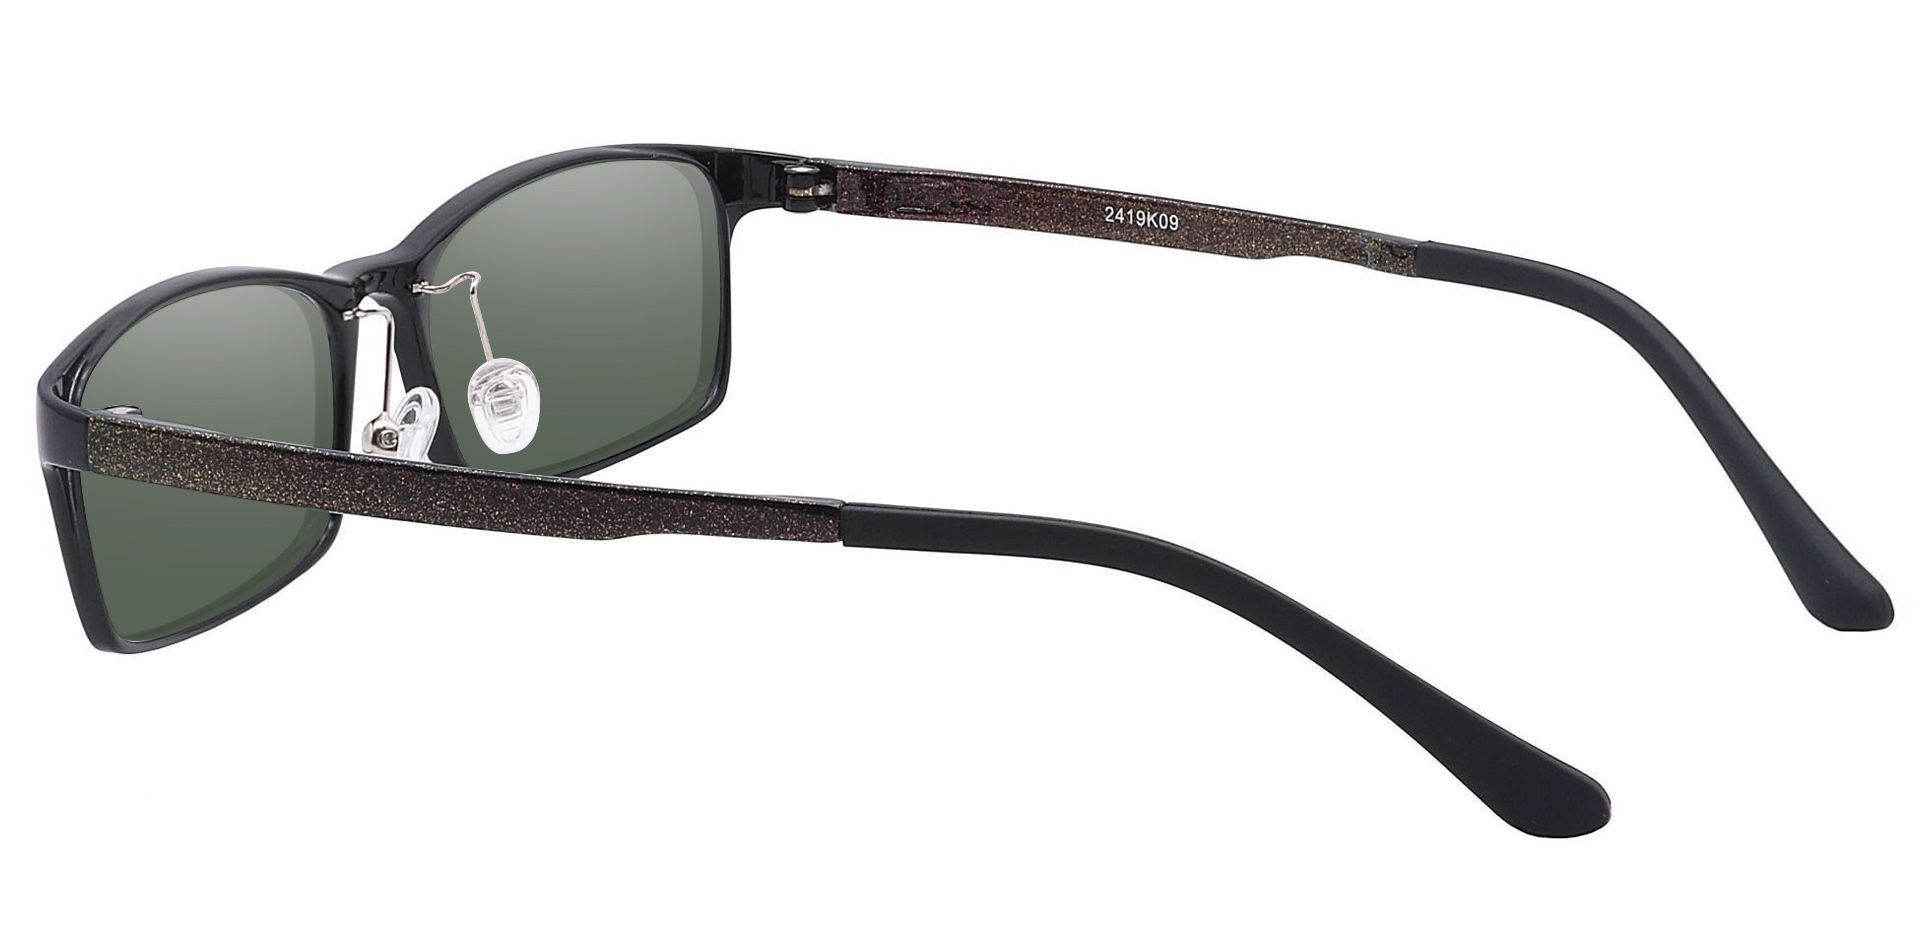 Hydra Rectangle Prescription Sunglasses - Black Frame With Green Lenses